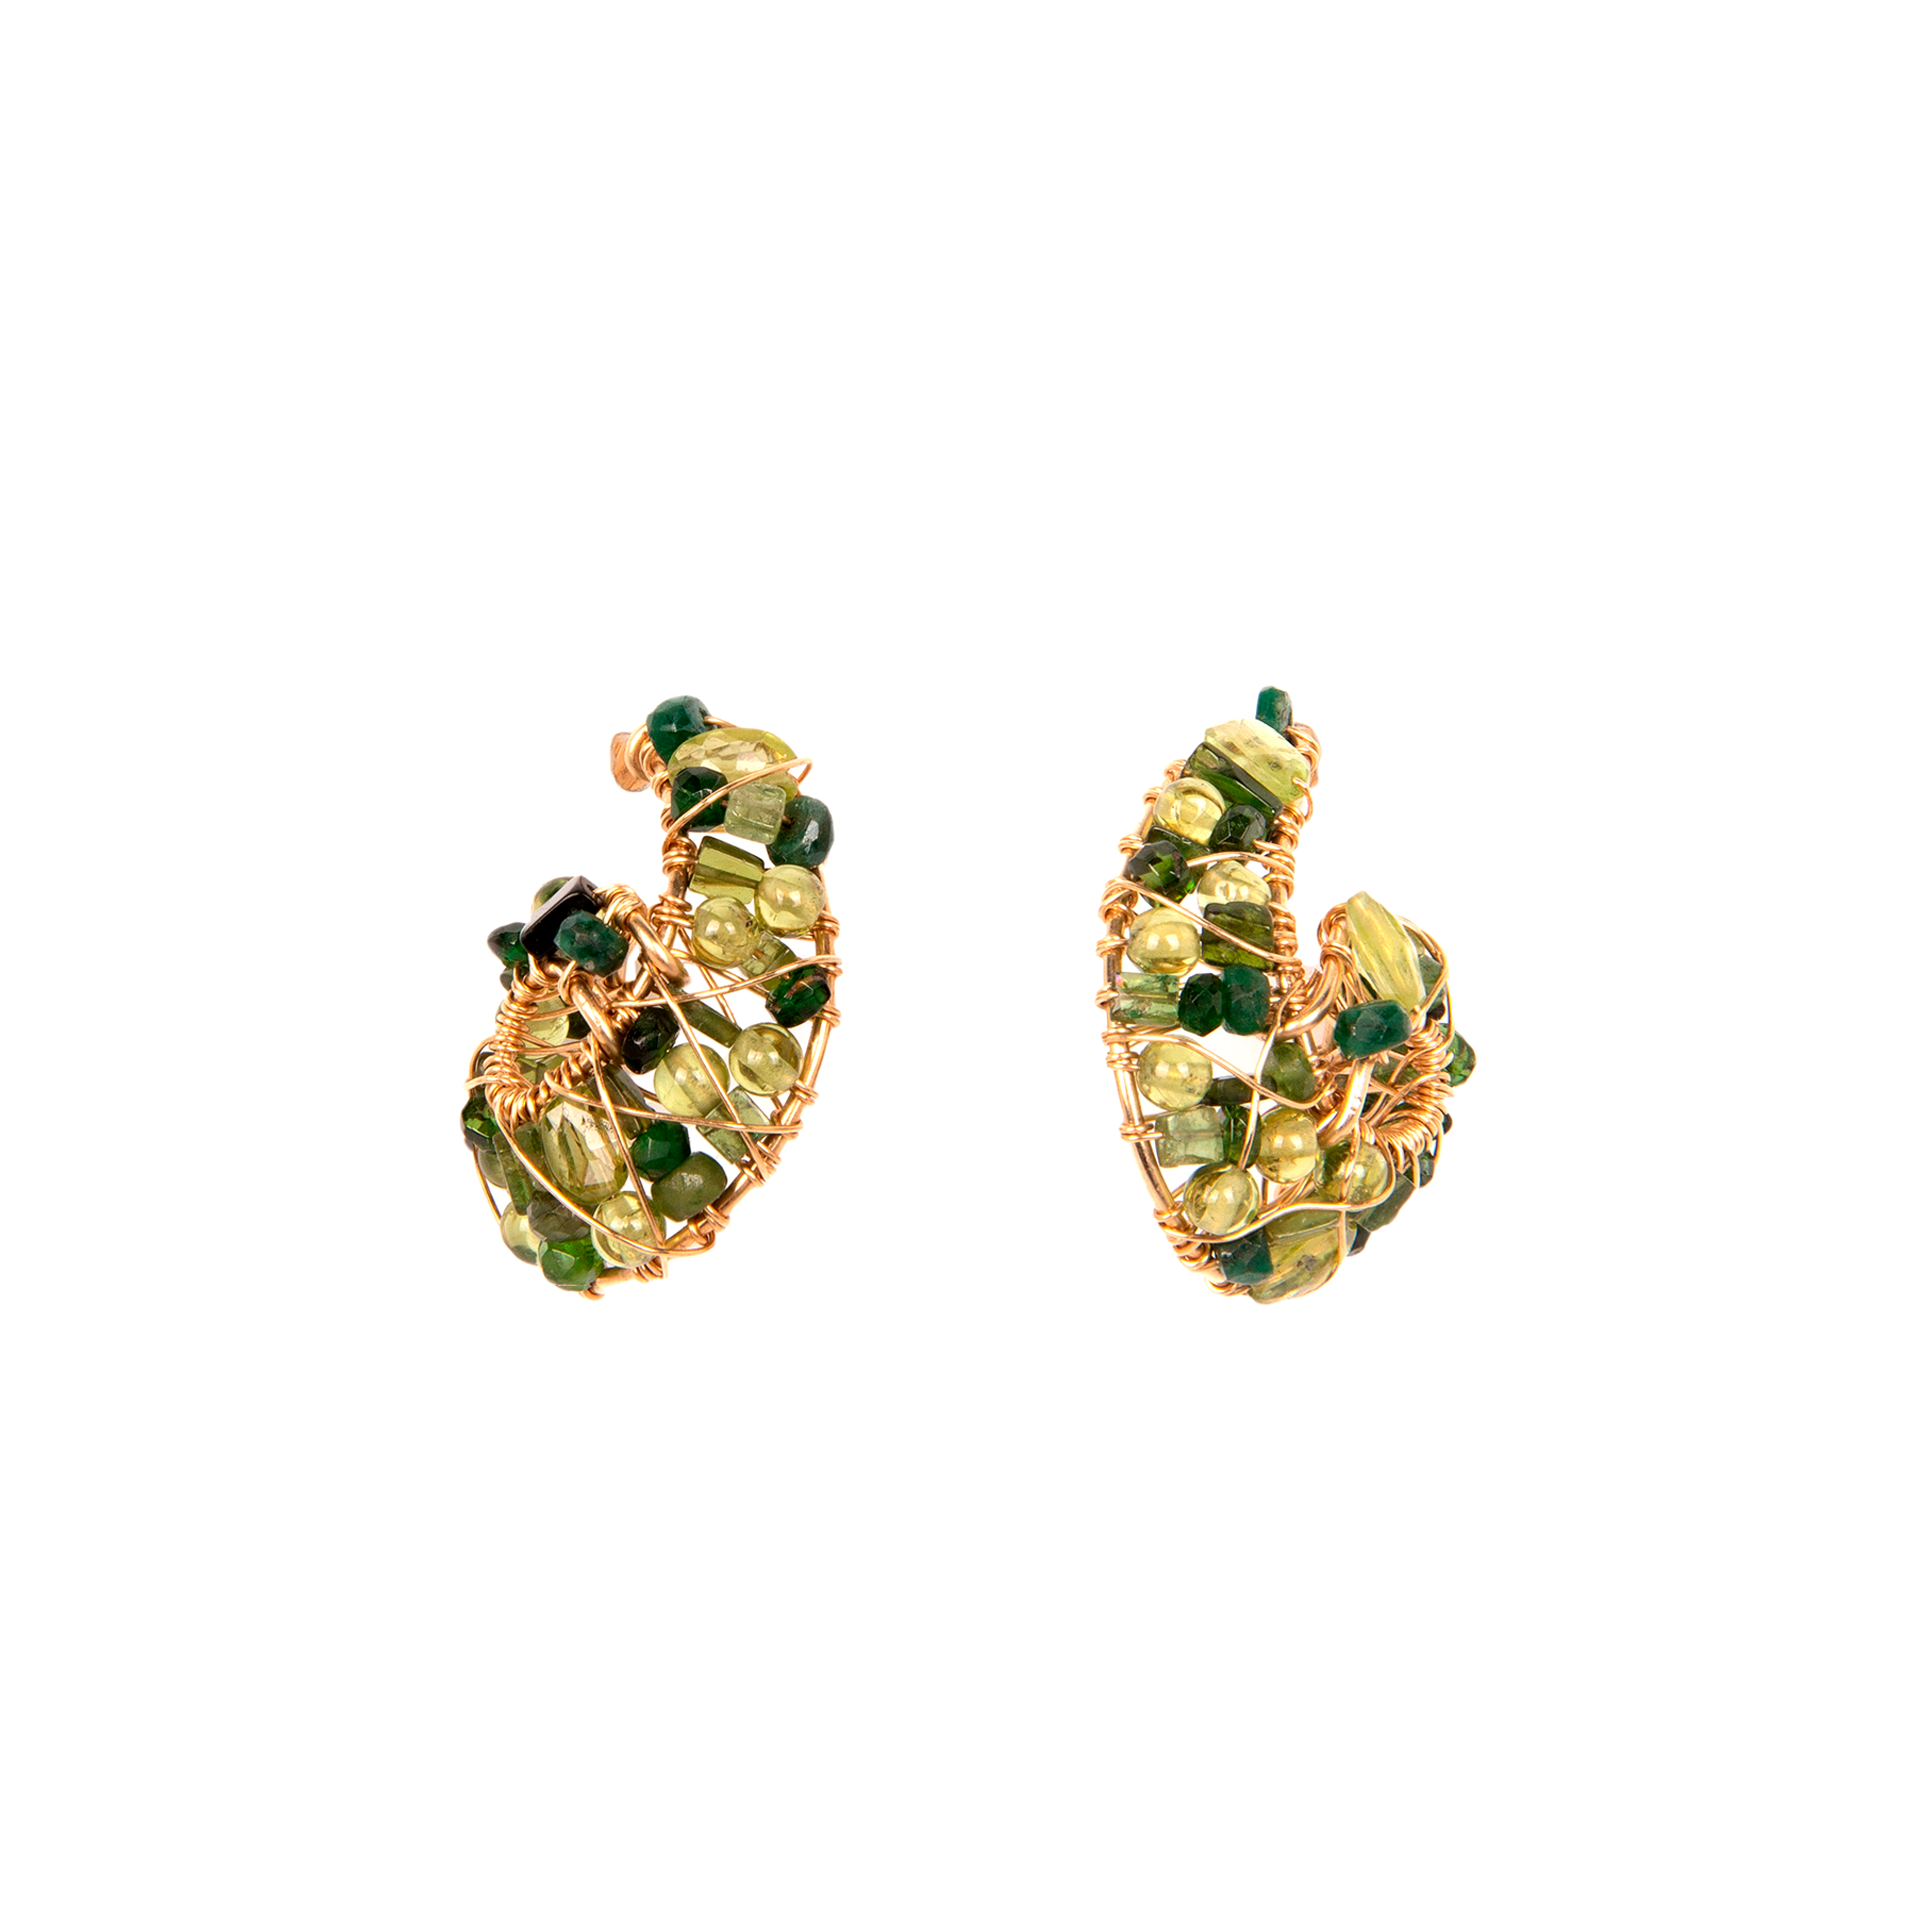 Senecio Earrings #1 (30mm) - Peridoto, Tourmalina Verde, Zafiro Verde Earrings TARBAY   